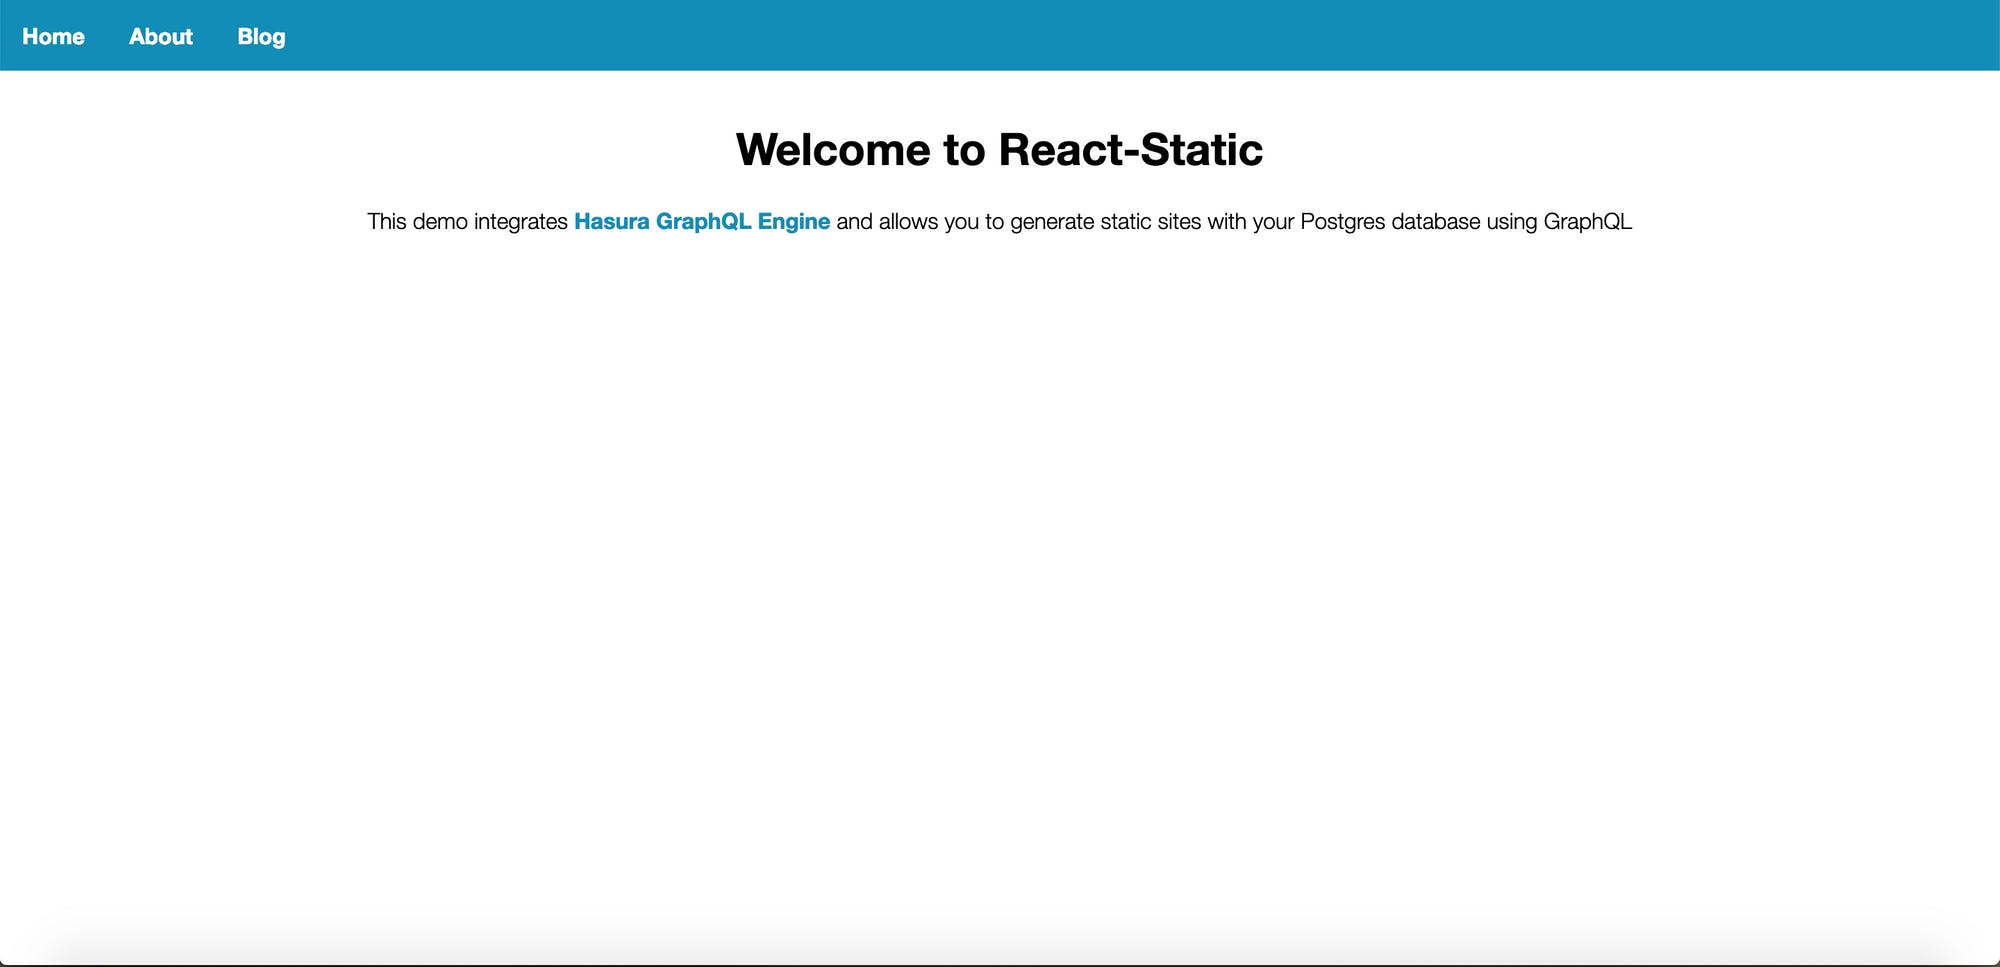 react-static with Hasura GraphQL